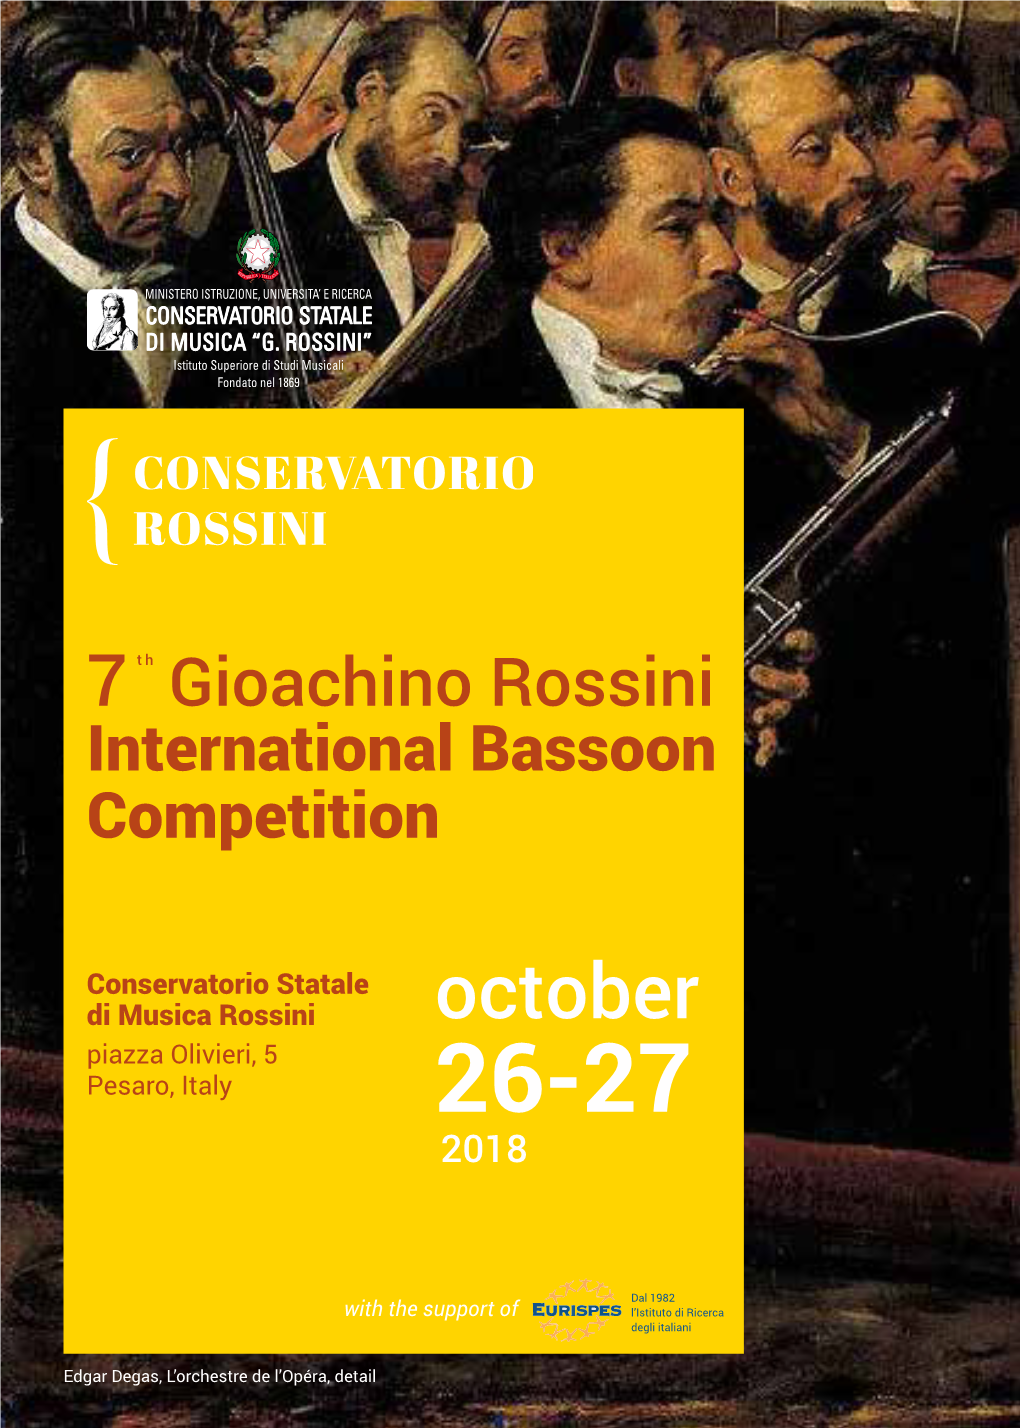 October Piazza Olivieri, 5 Pesaro, Italy 26-27 2018